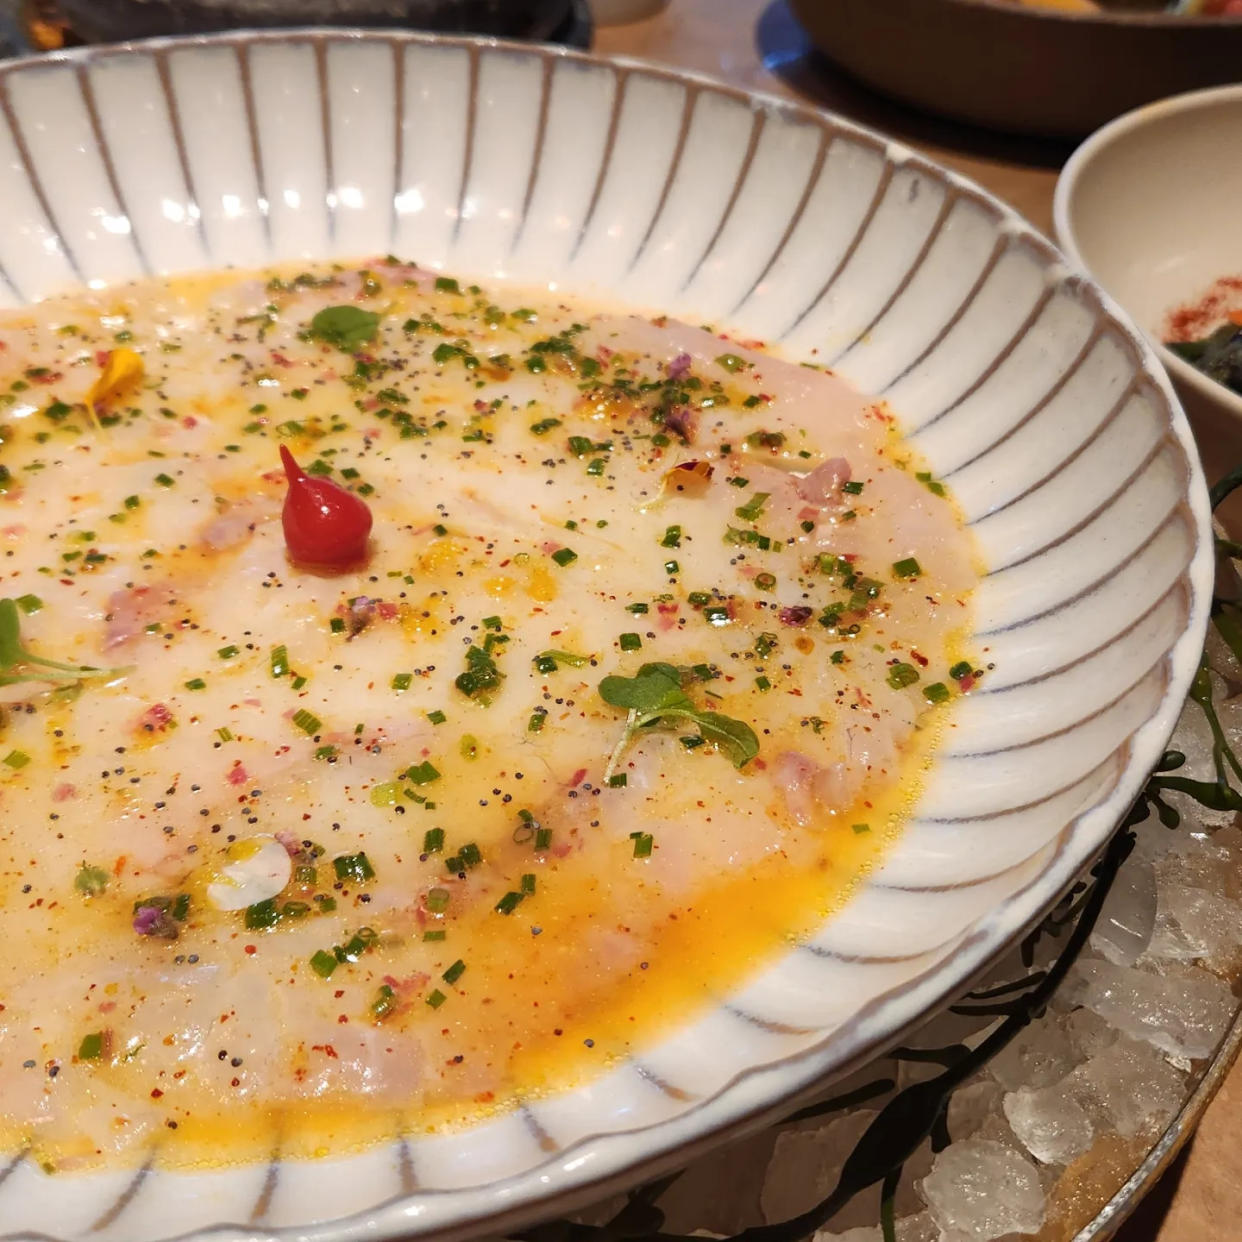 Sea bream (white fish) carpaccio topped with calamansi (a citrus fruit) and olive oil at Ava MediterrAegean. (Photo: Holly Kapherr)